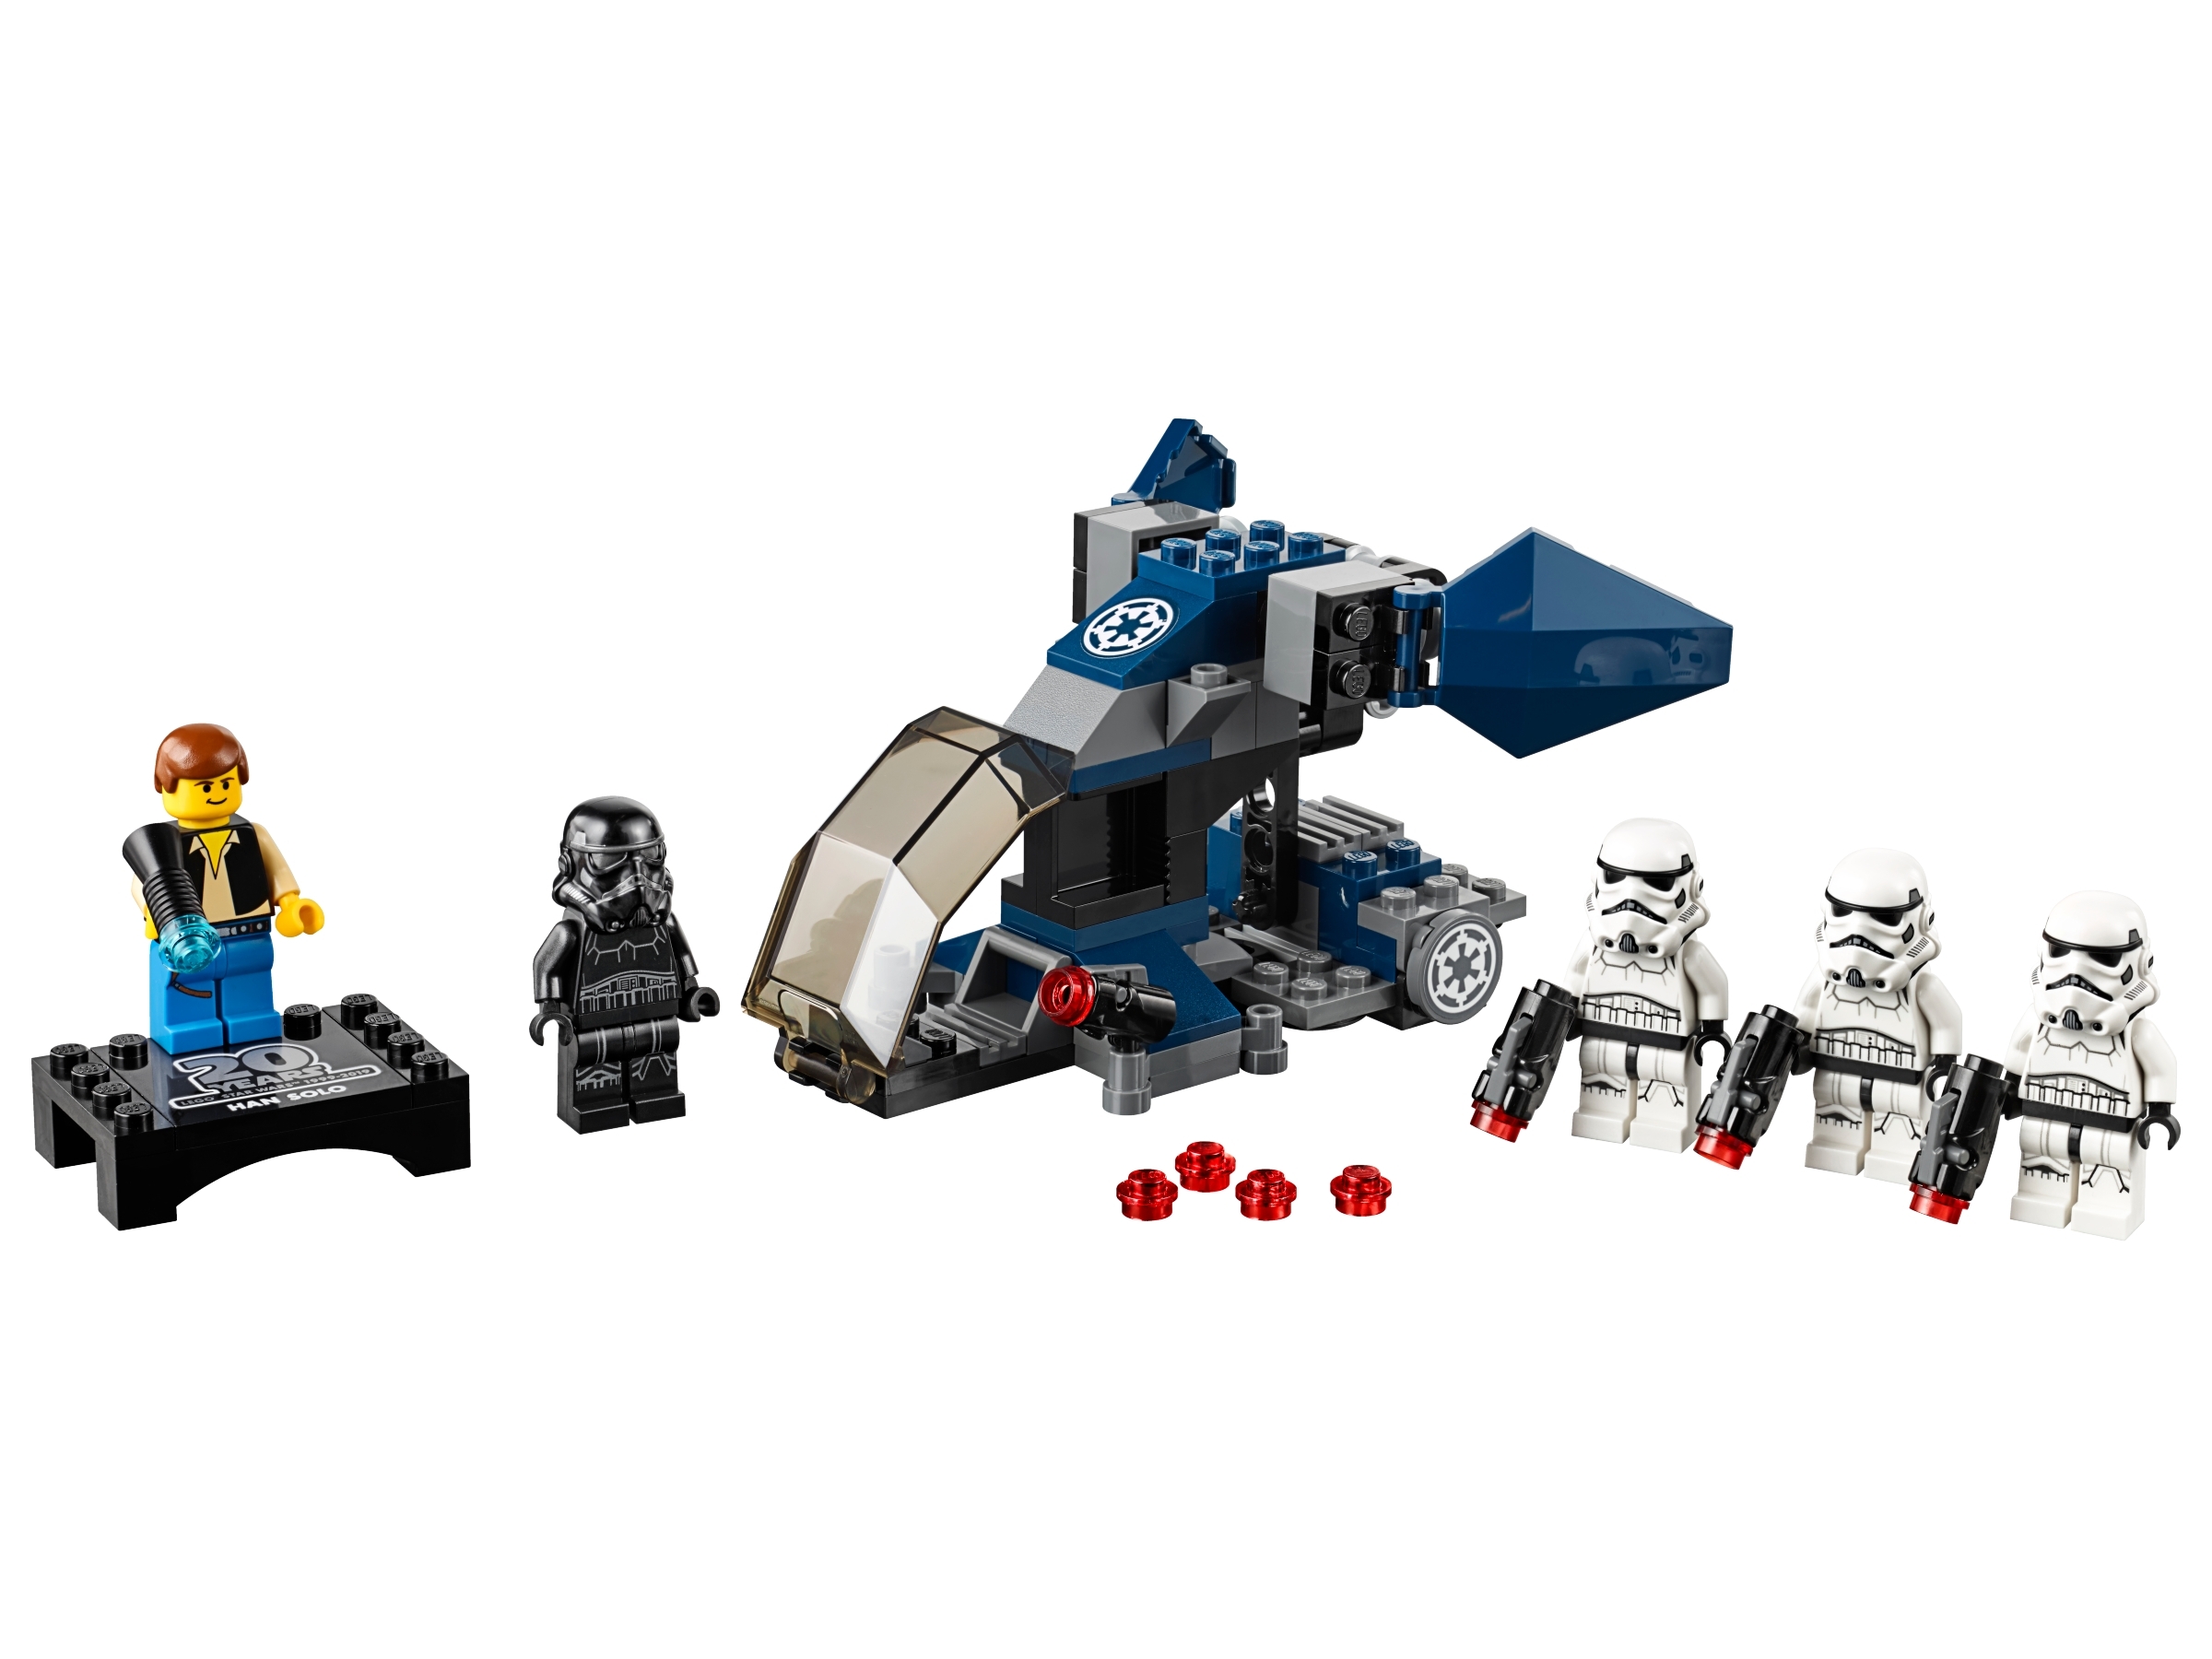 lego star wars imperial dropship